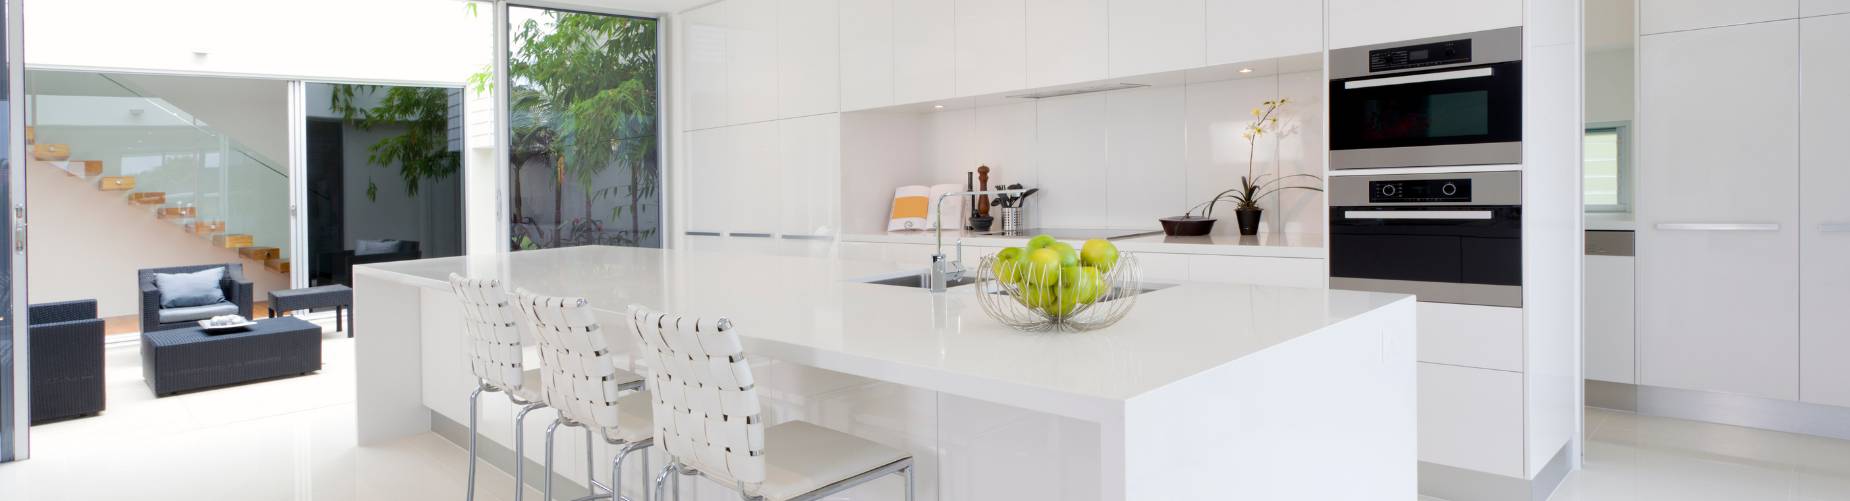 Modern kitchen with a white colour scheme